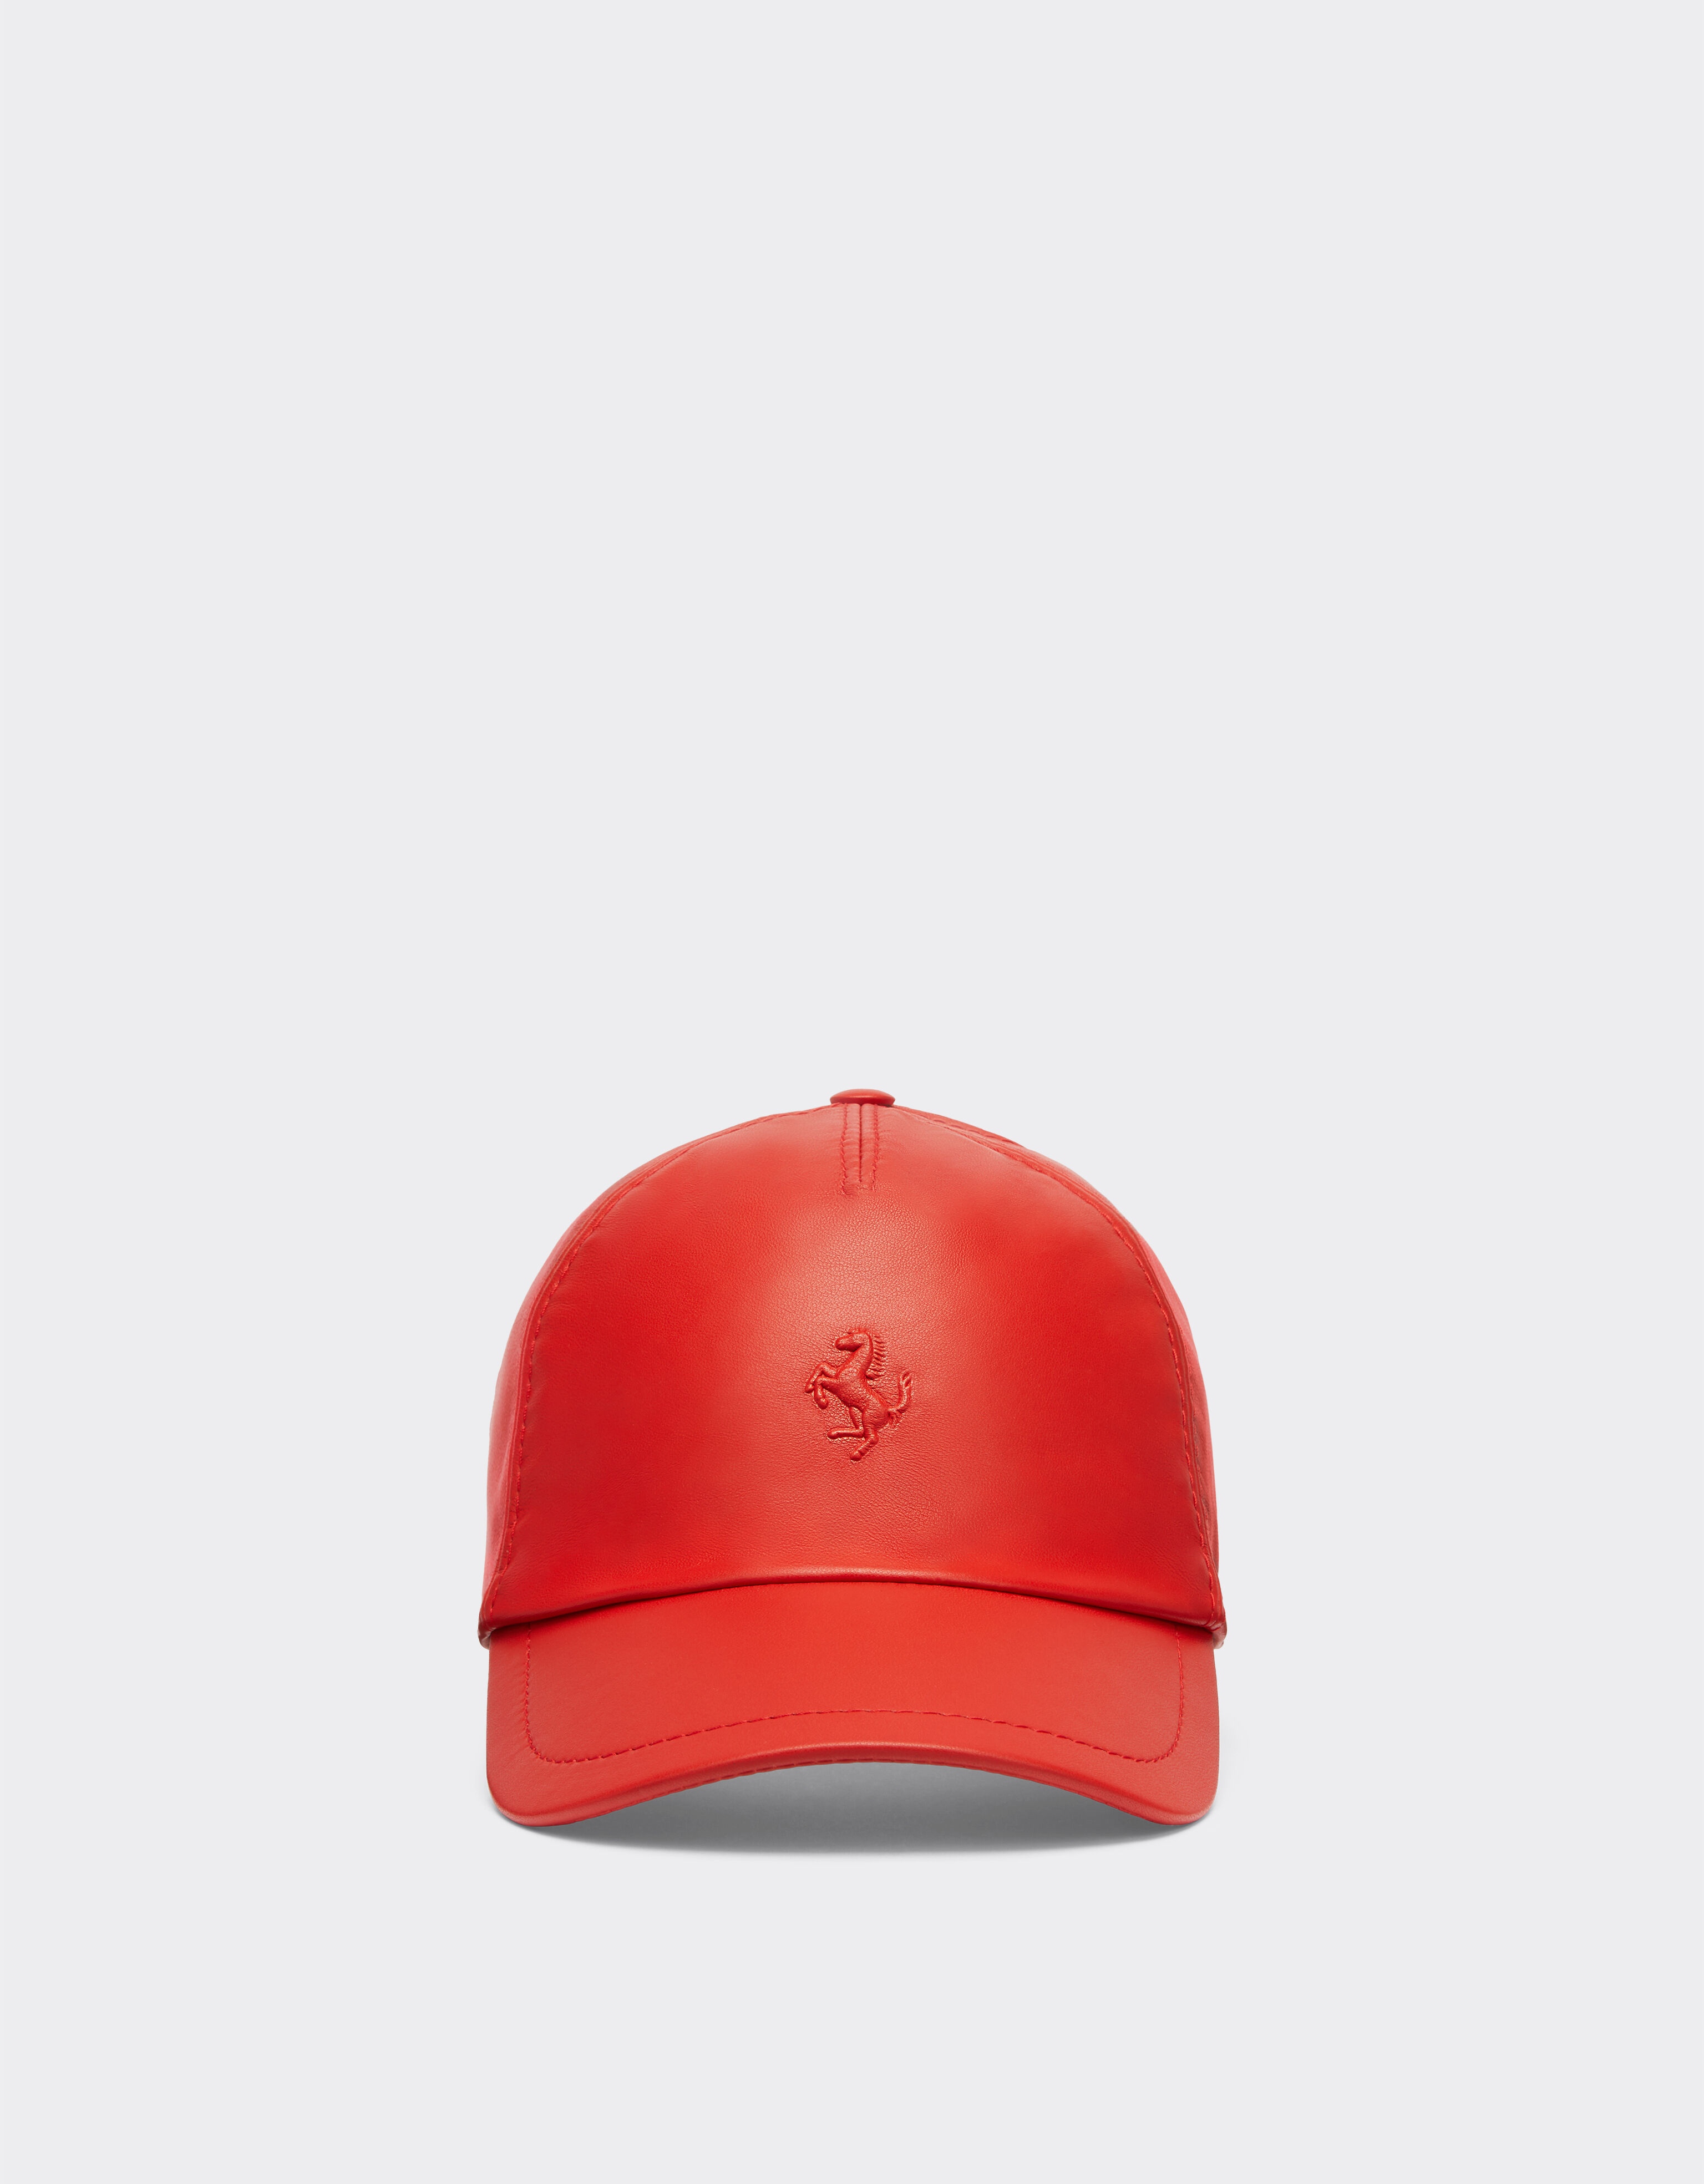 Ferrari Baseball cap with Prancing Horse logo Ingrid 21427f